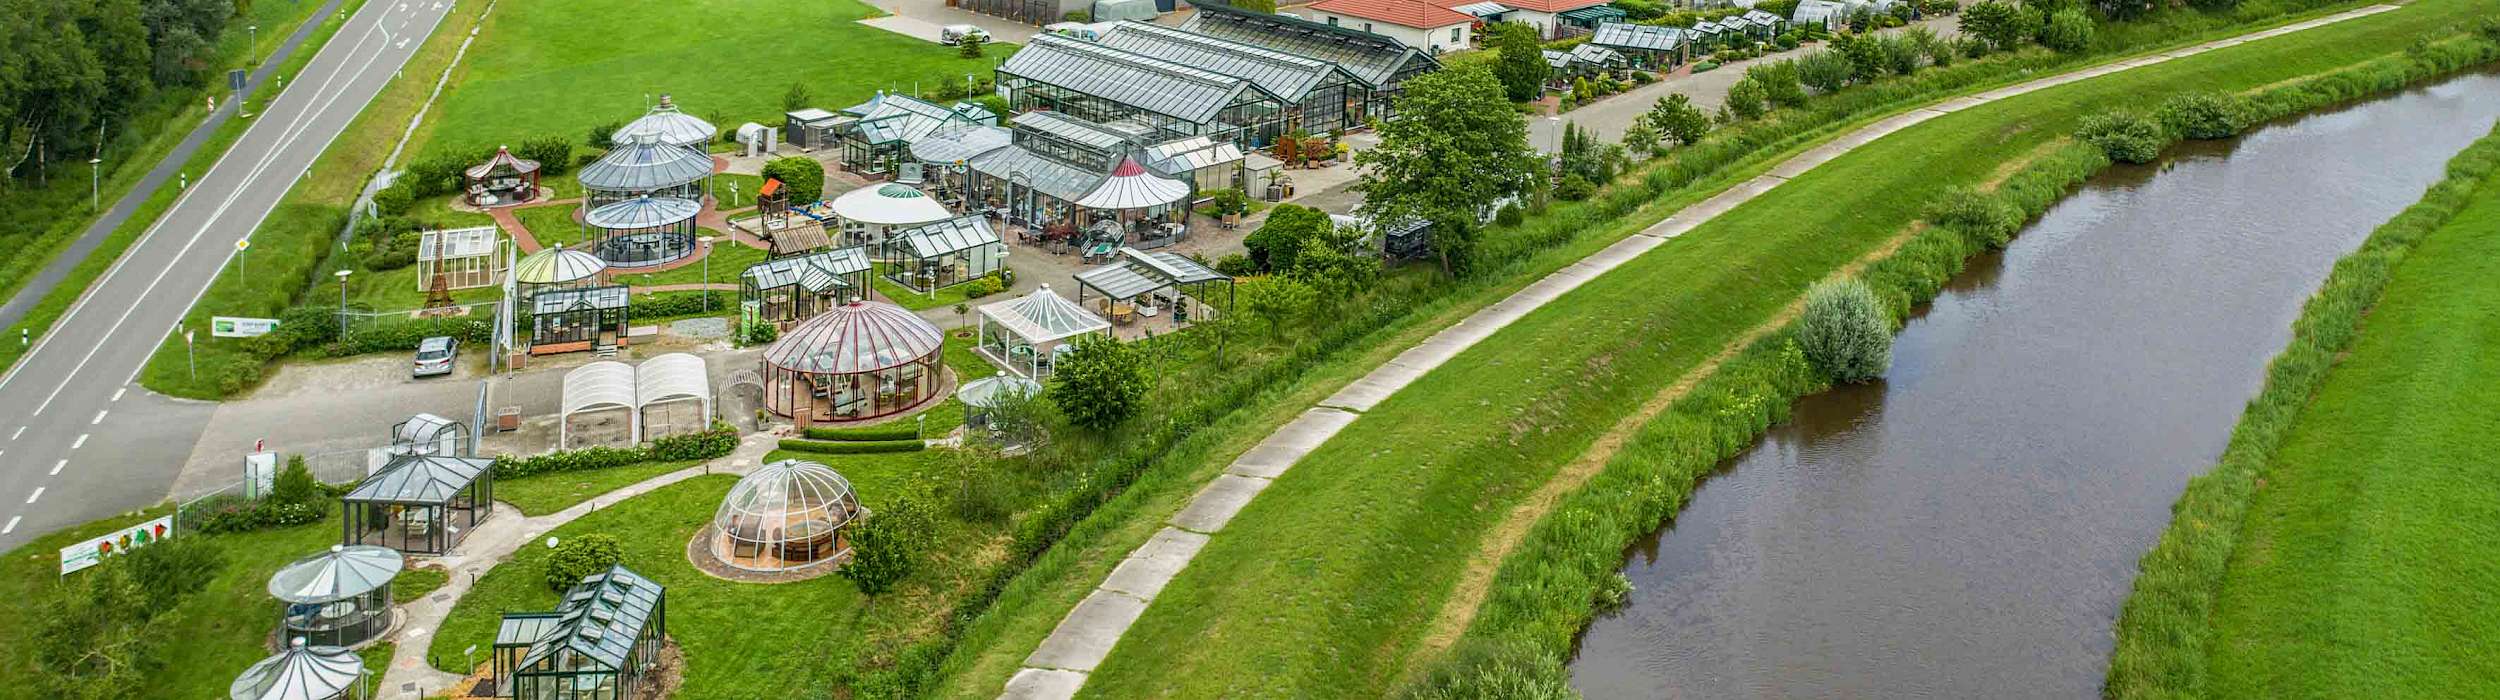 Aerial view of the exhibition garden in Apen